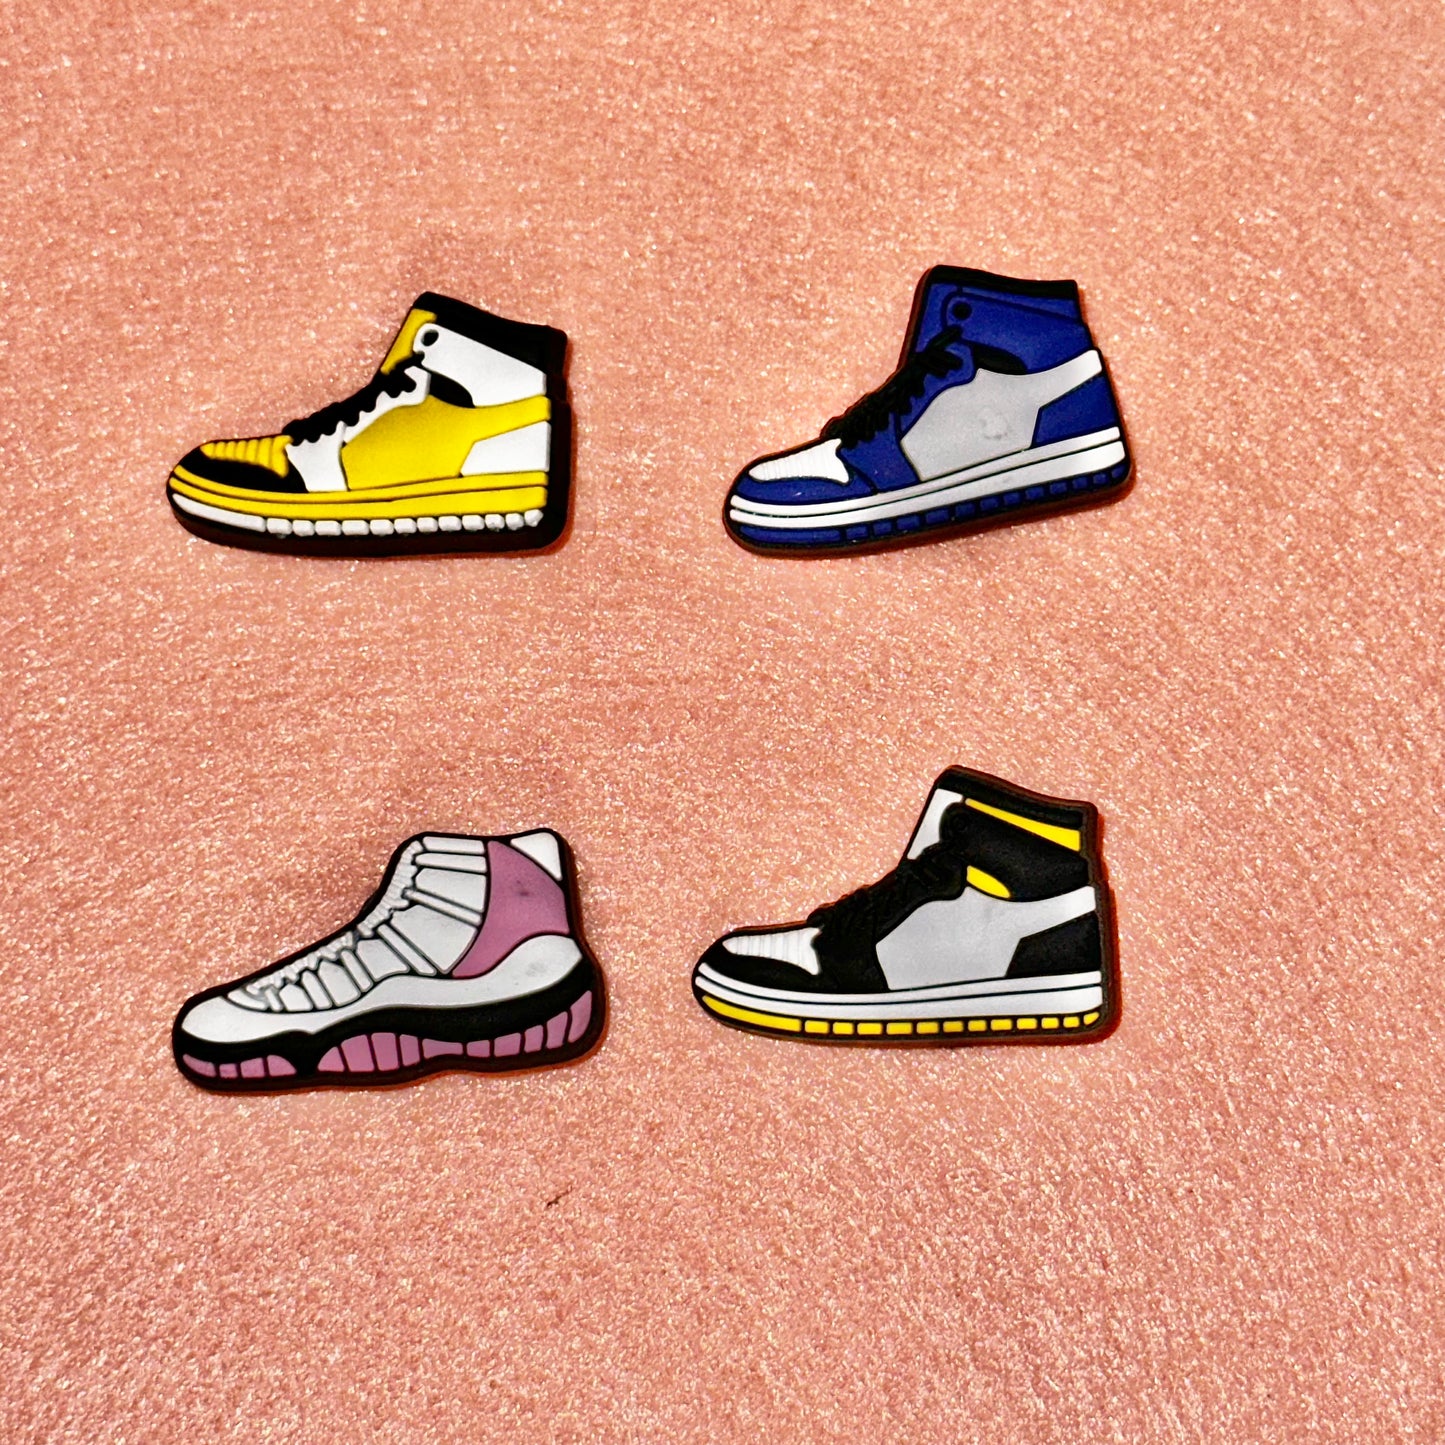 “Shoe” Croc Charms